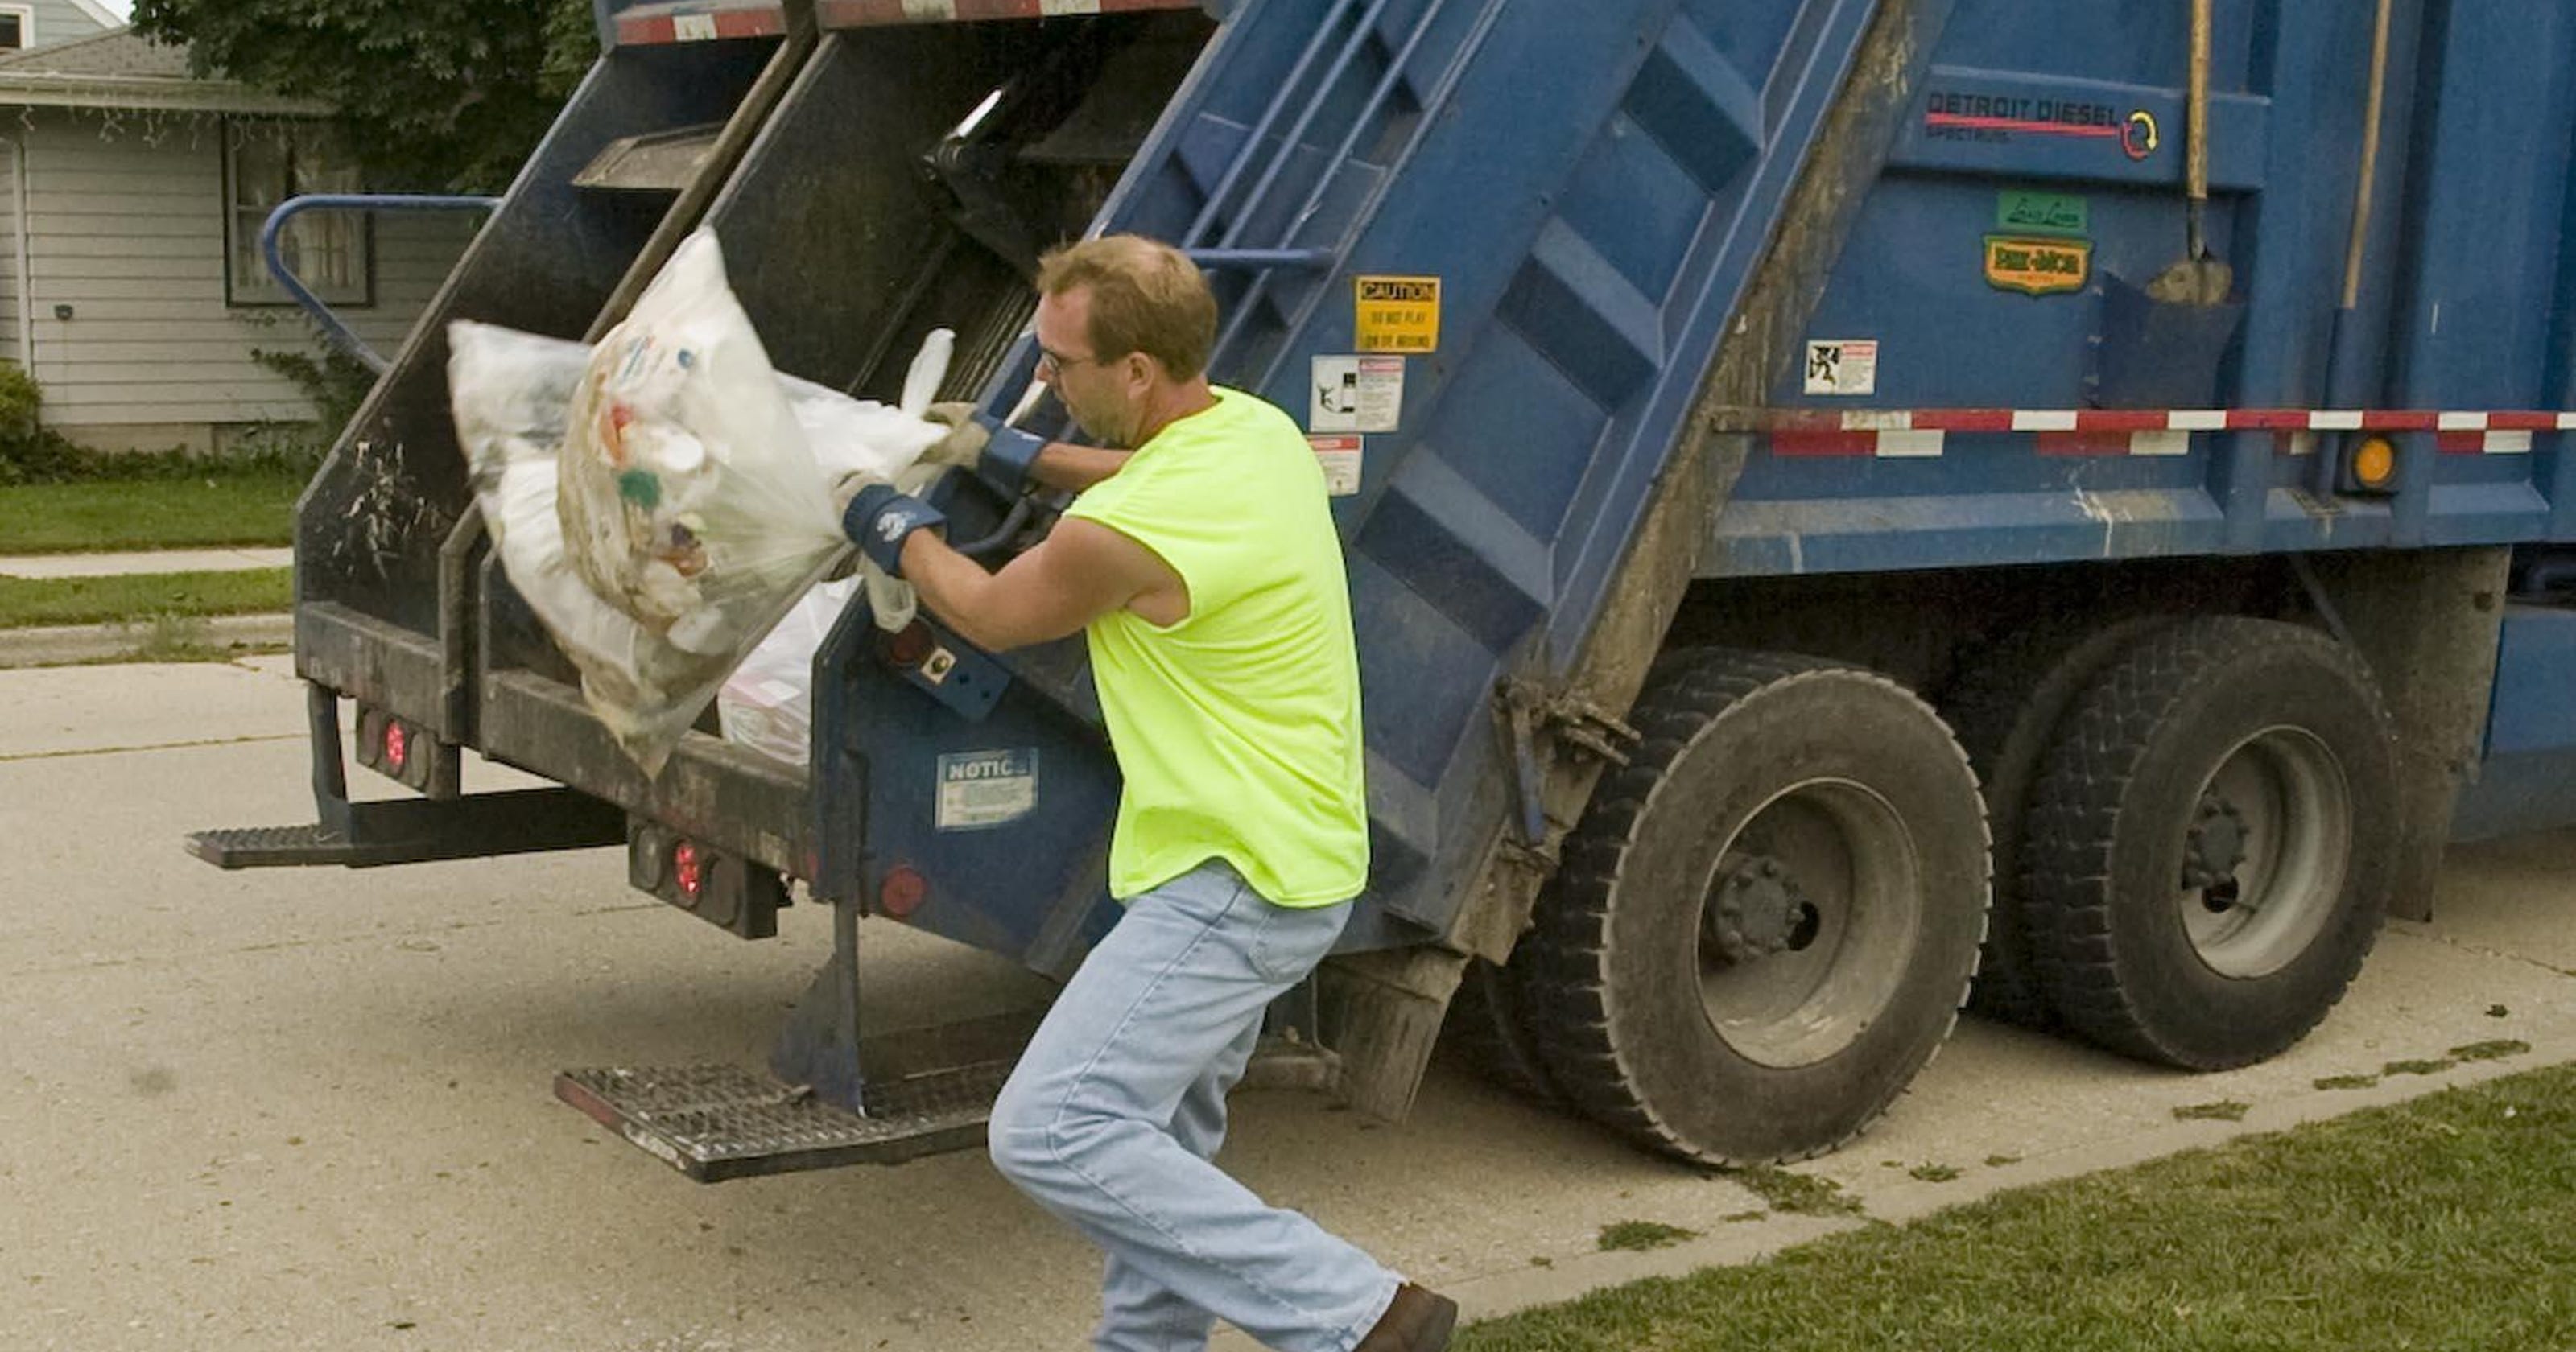 No garbage pickup on Labor Day